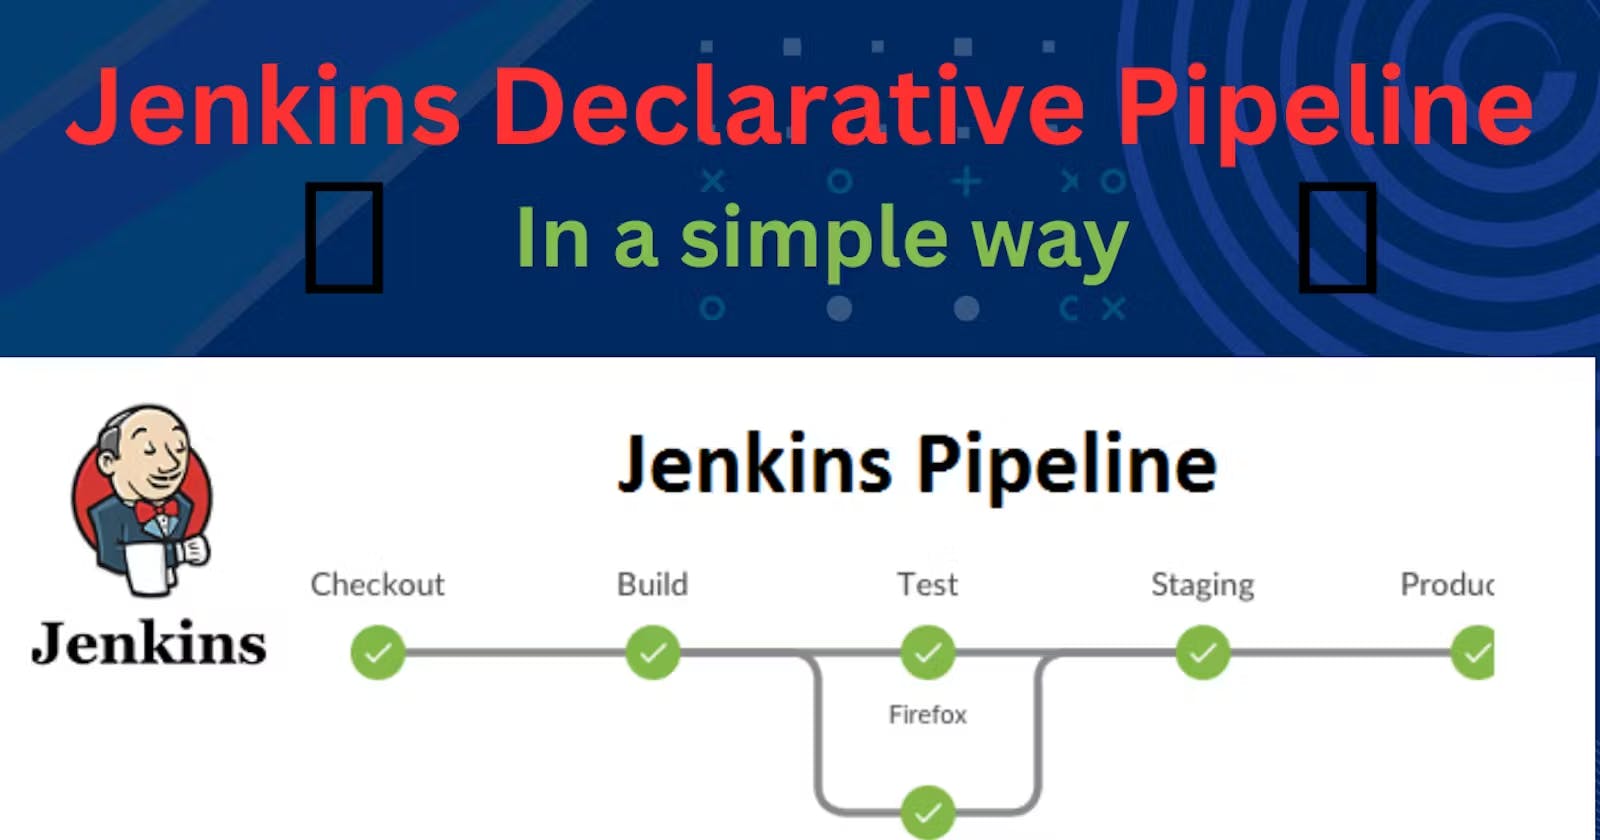 📂Day 26 - Jenkins Declarative Pipeline